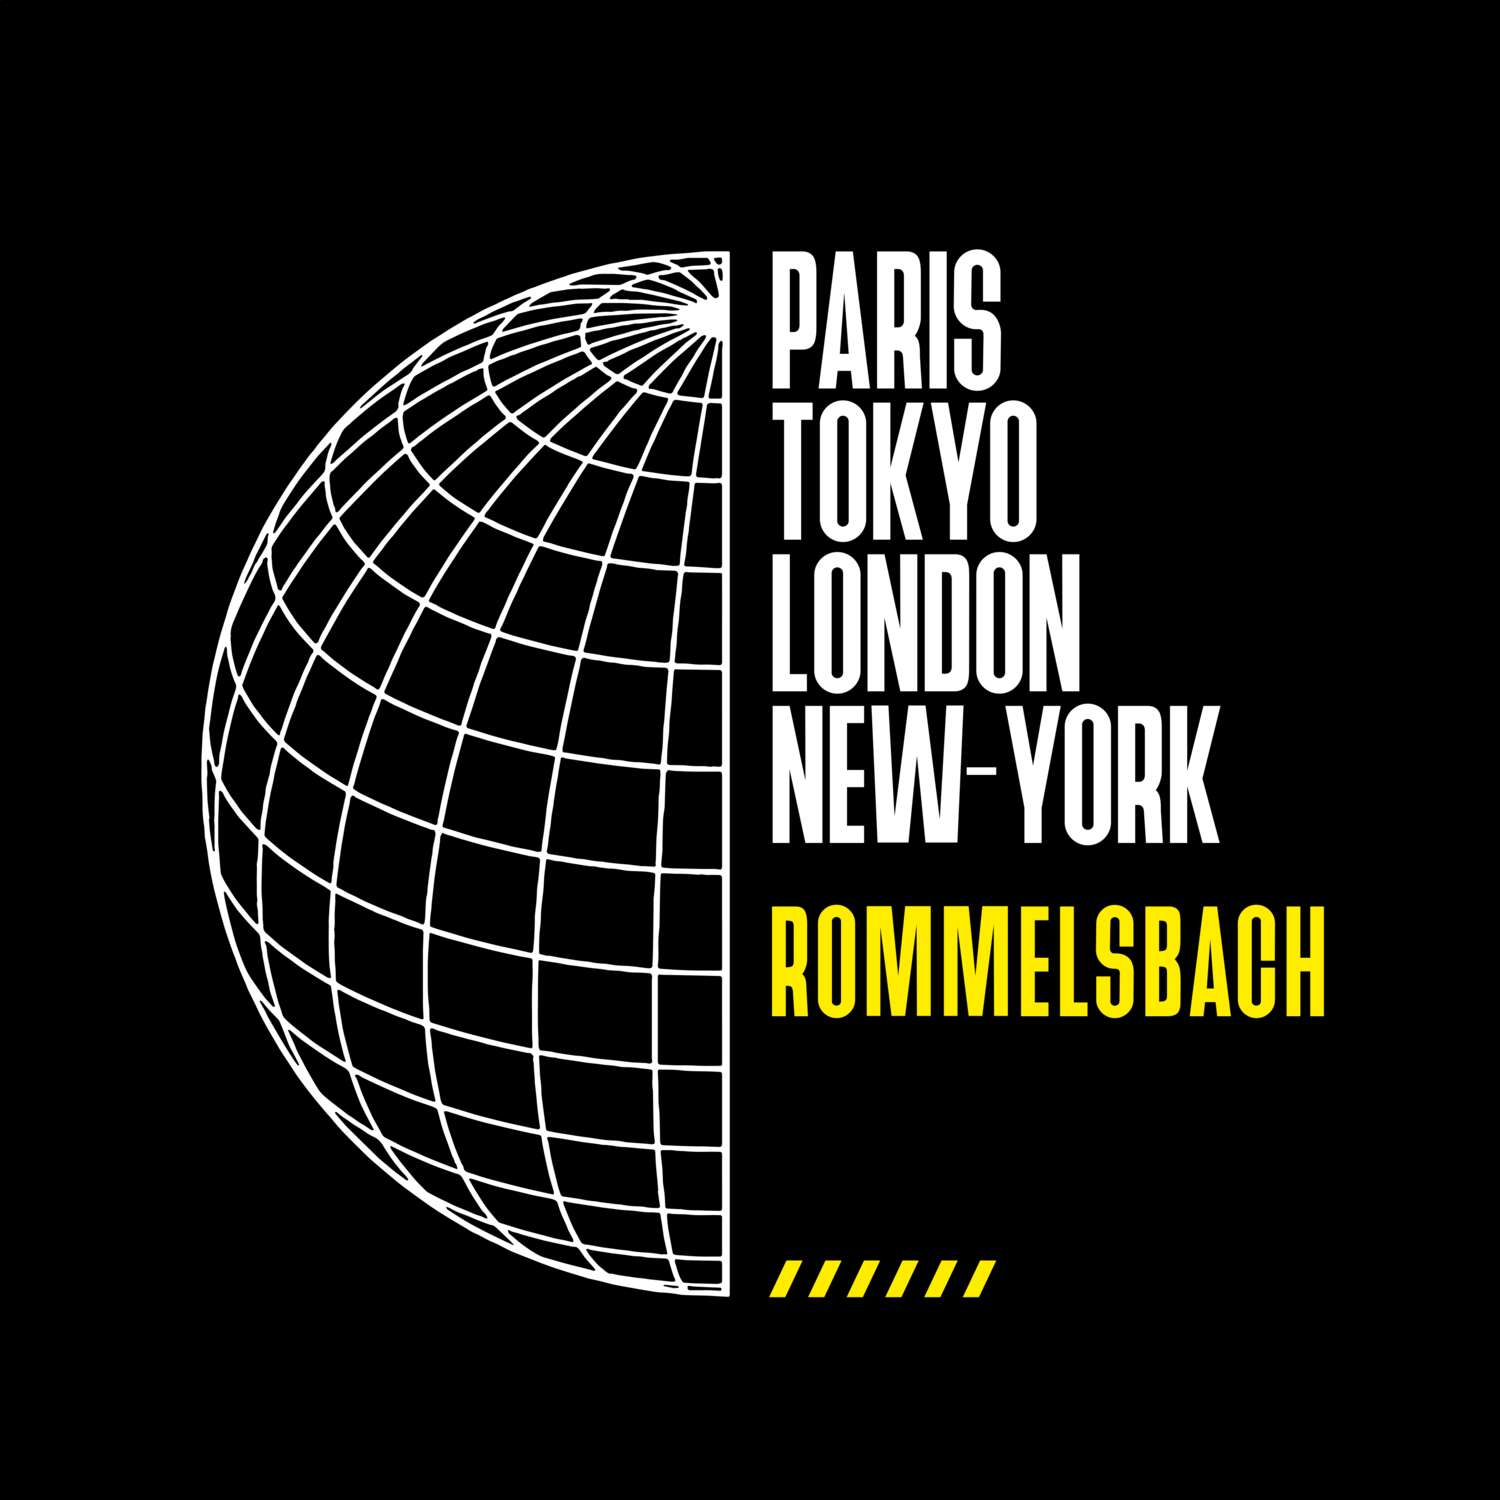 Rommelsbach T-Shirt »Paris Tokyo London«